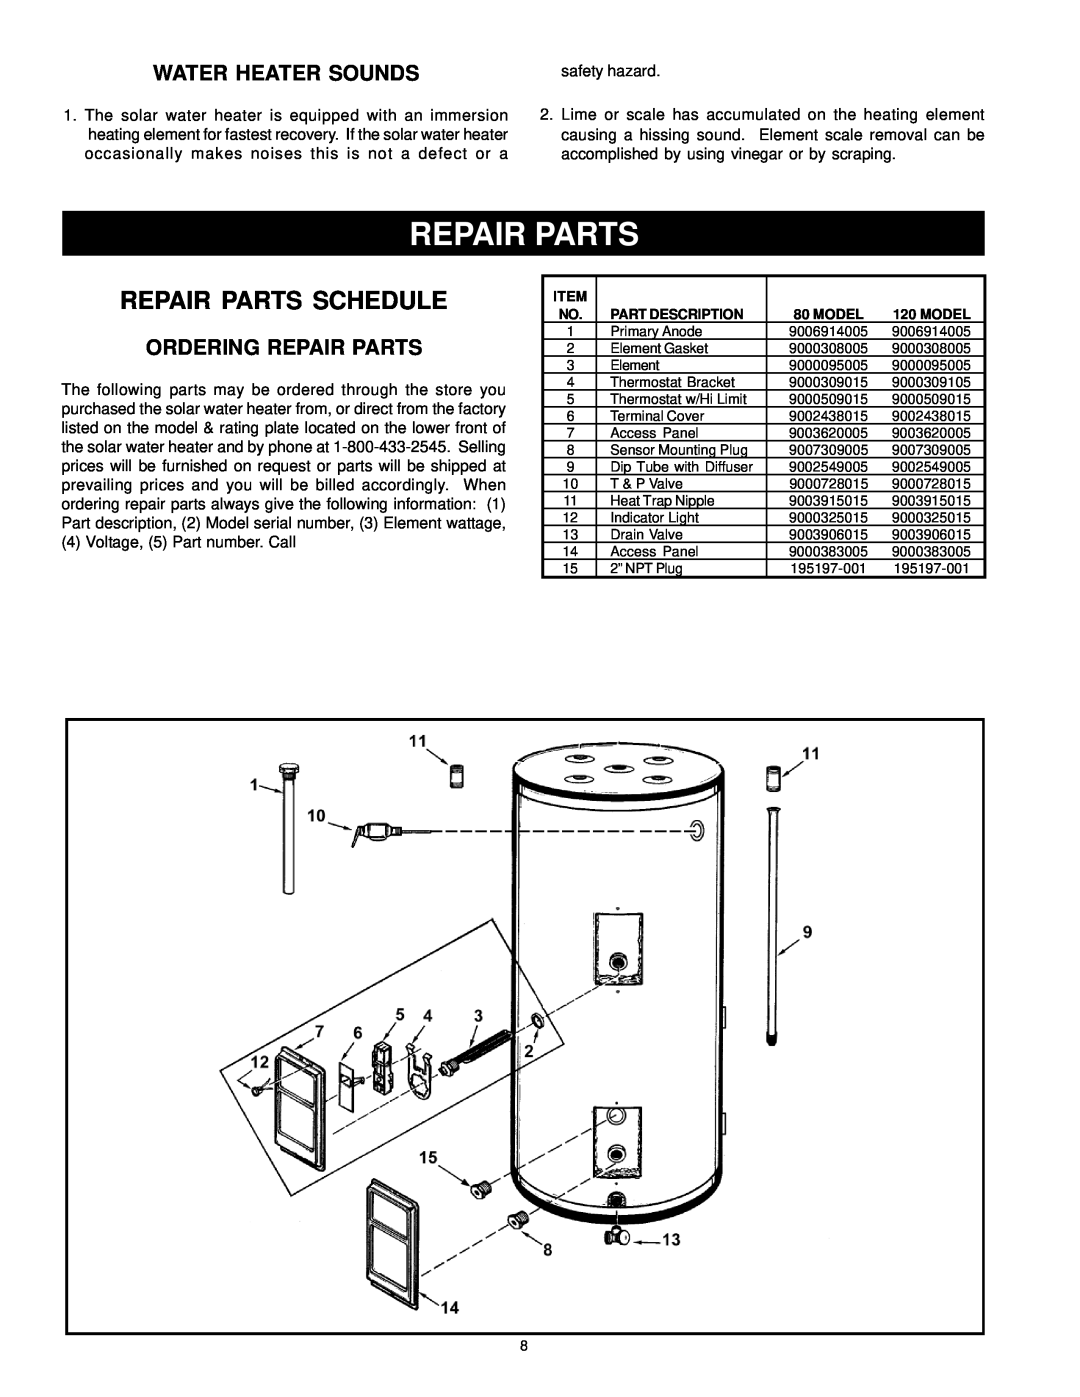 American Water Heater 317365-002 instruction manual Repair Parts Schedule, Water Heater Sounds, Ordering Repair Parts 